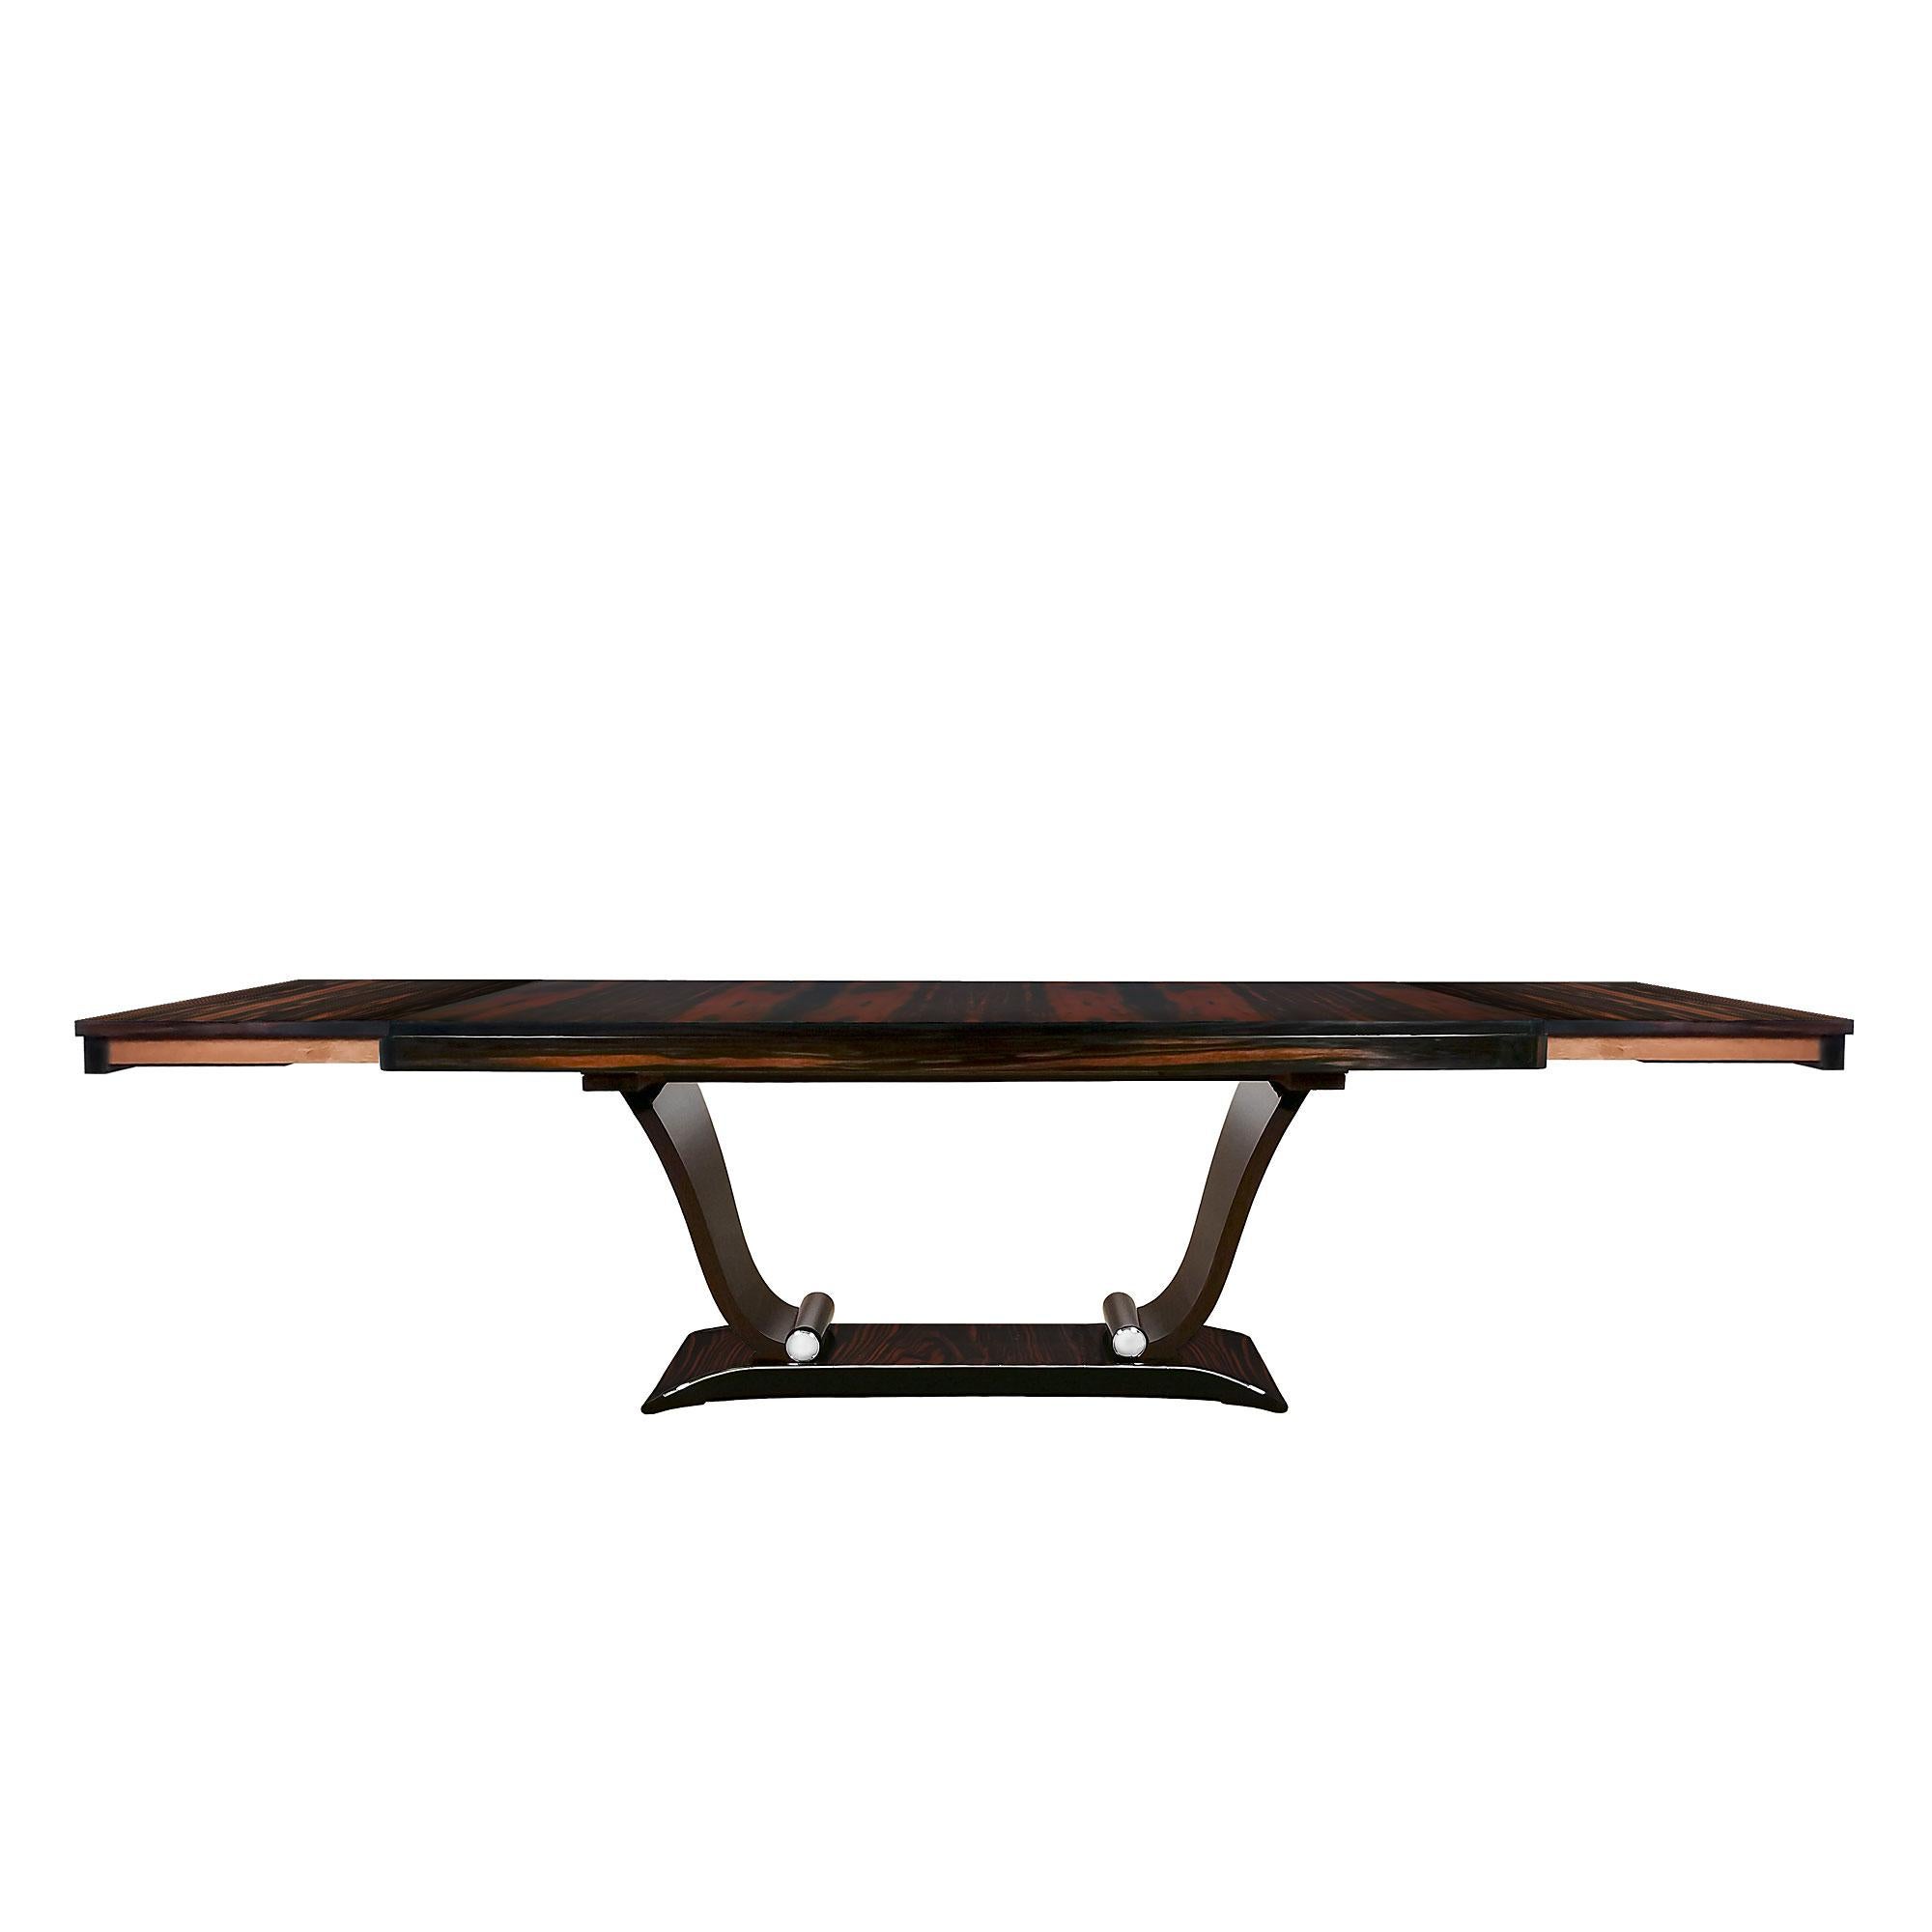 1930´s Art Deco Table, Paul Giordano, Macassar Ebony, Extensions Leaves, France 1